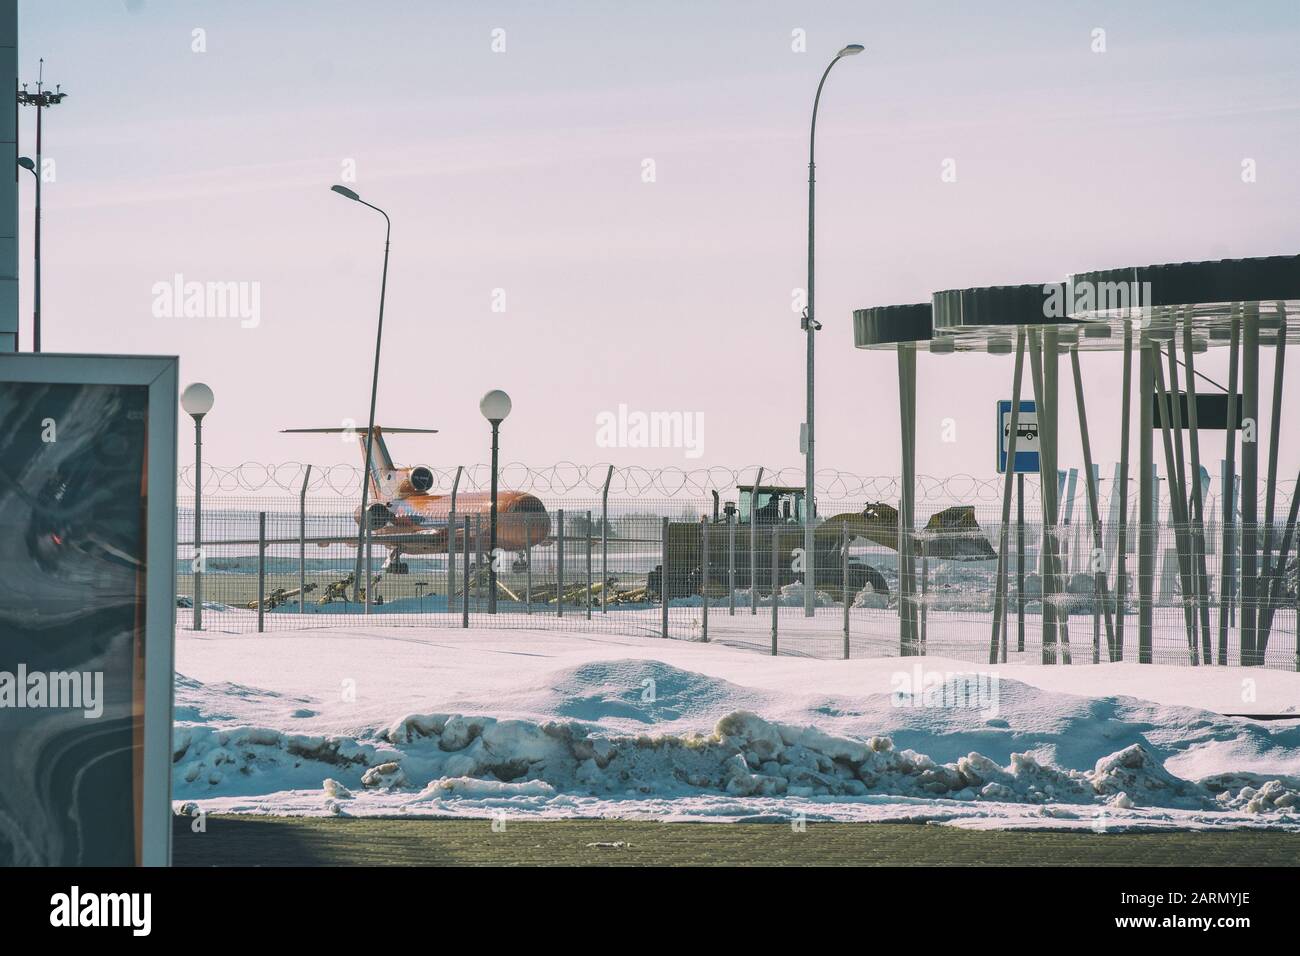 Samara, Russia - March 15, 2019: The plane is parked at the Kurumoch airport in the Samara region Stock Photo